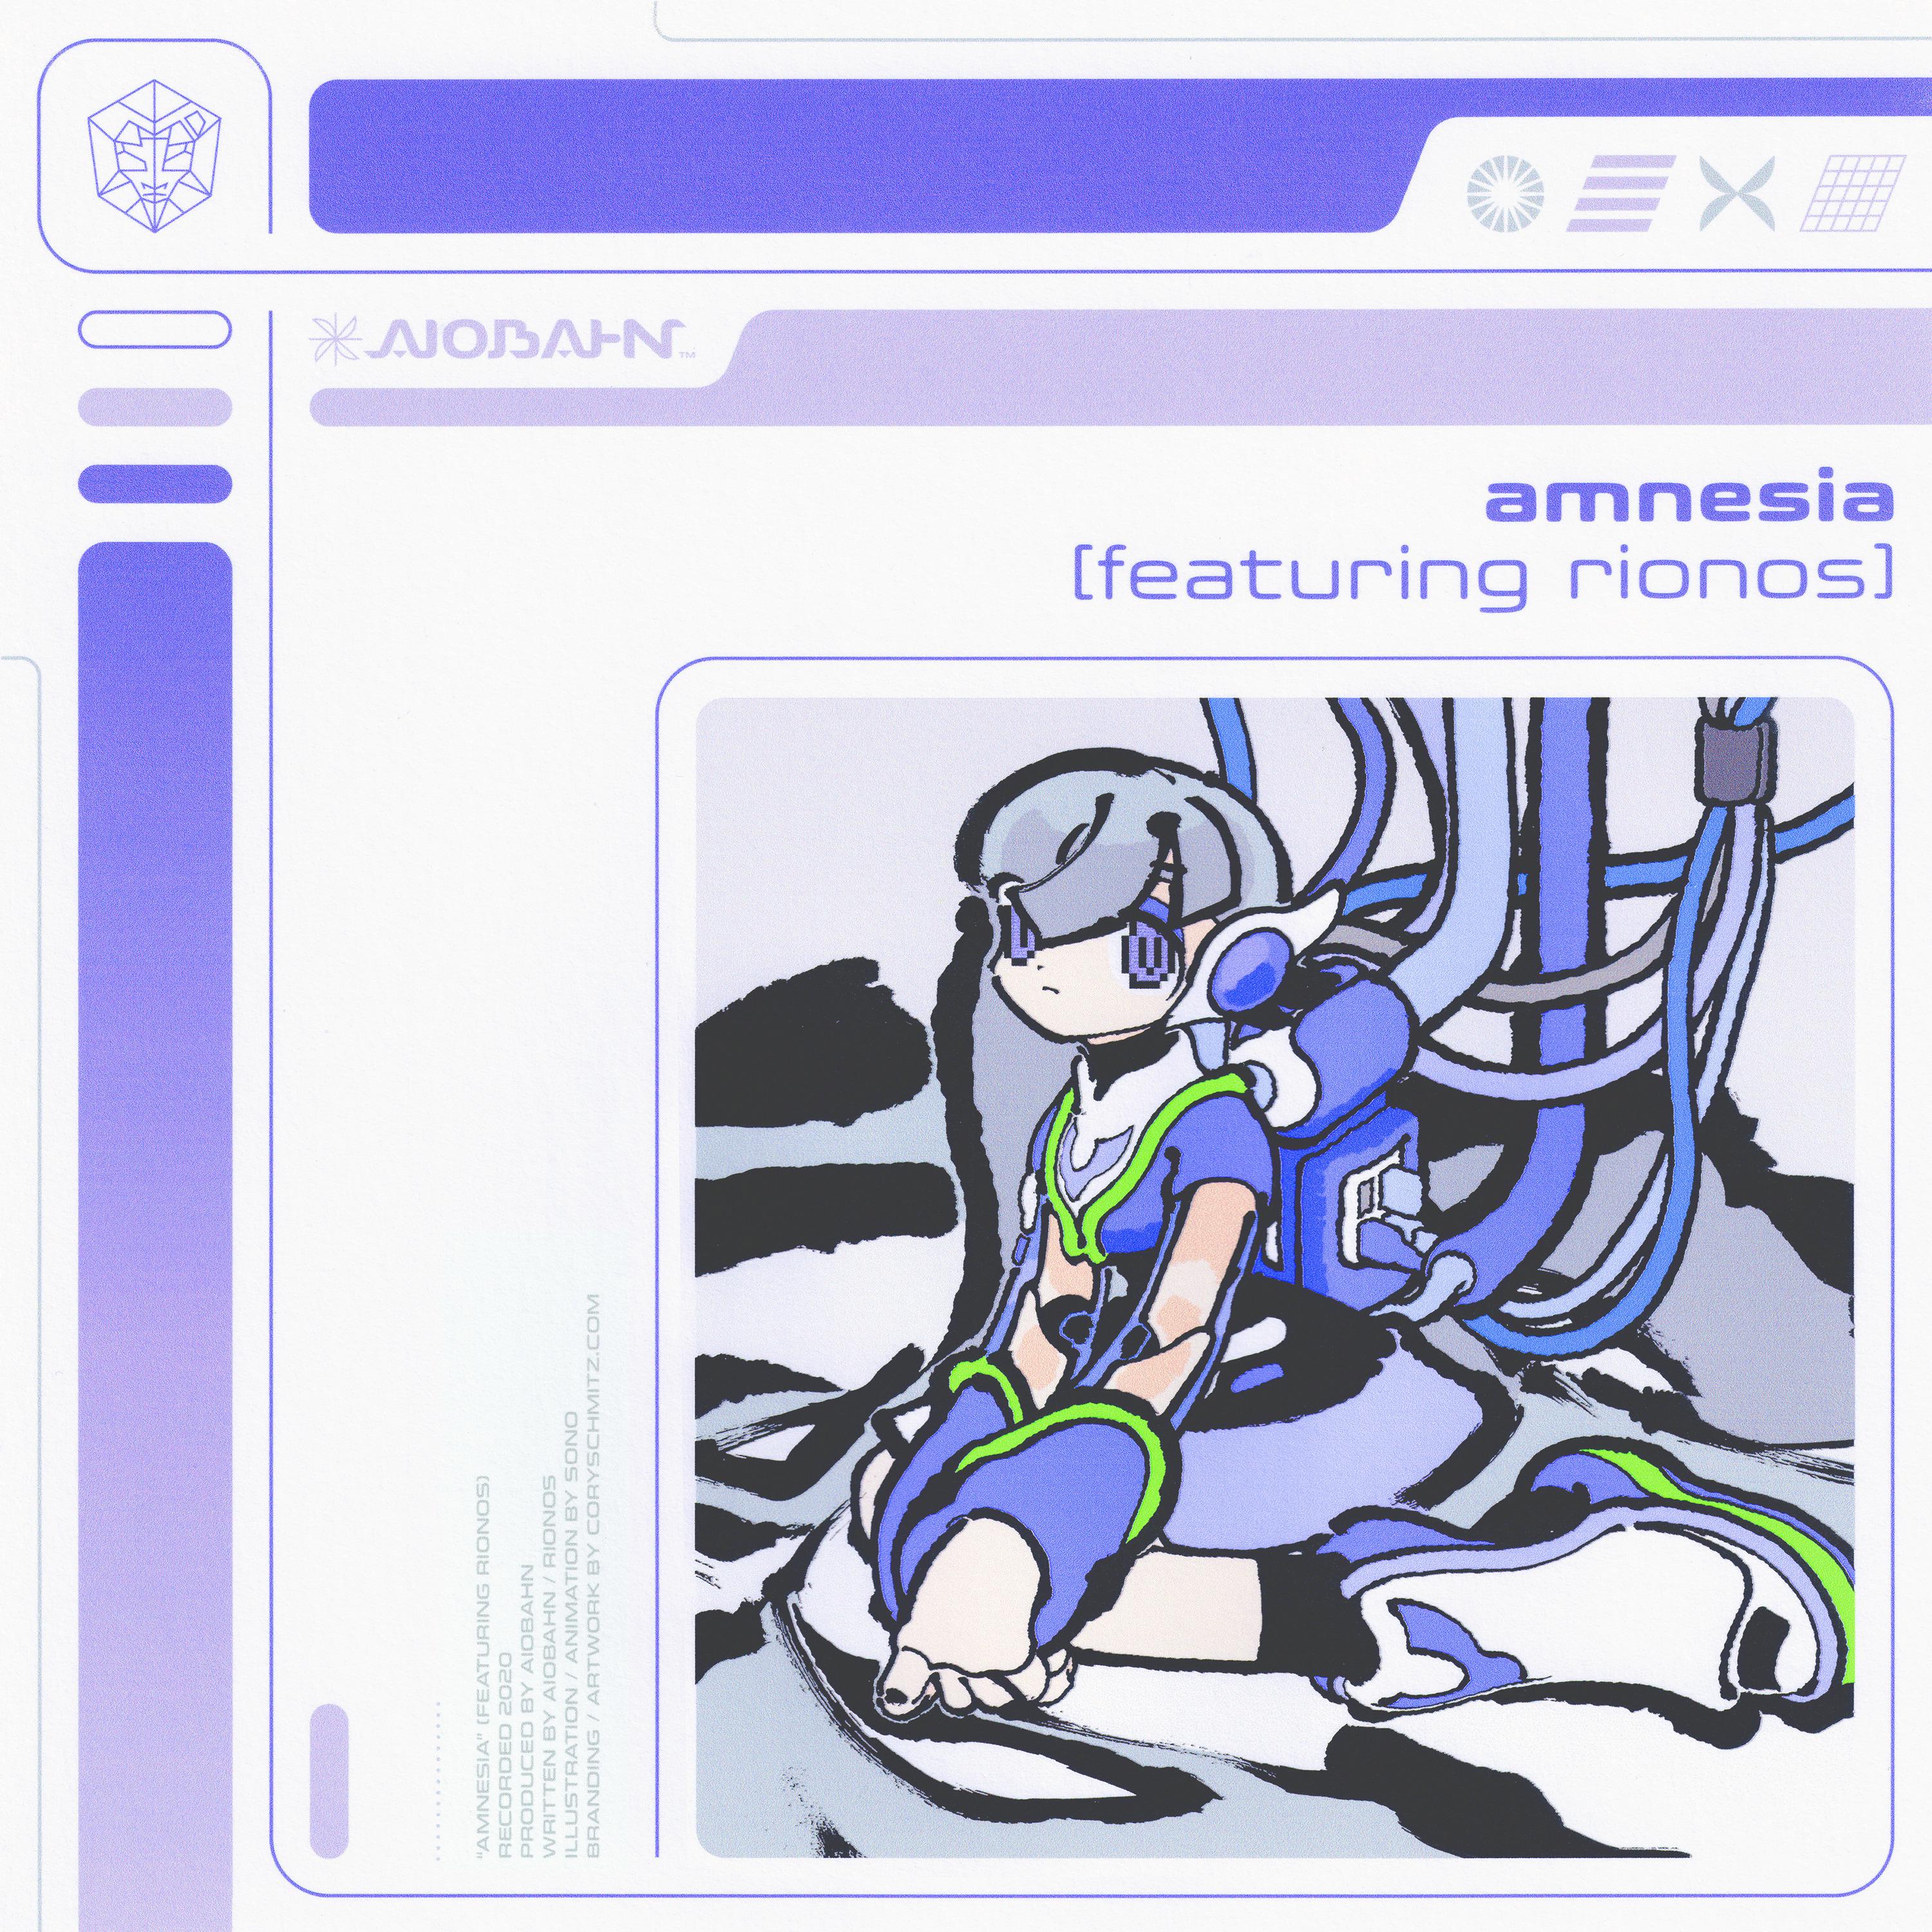 amnesia专辑